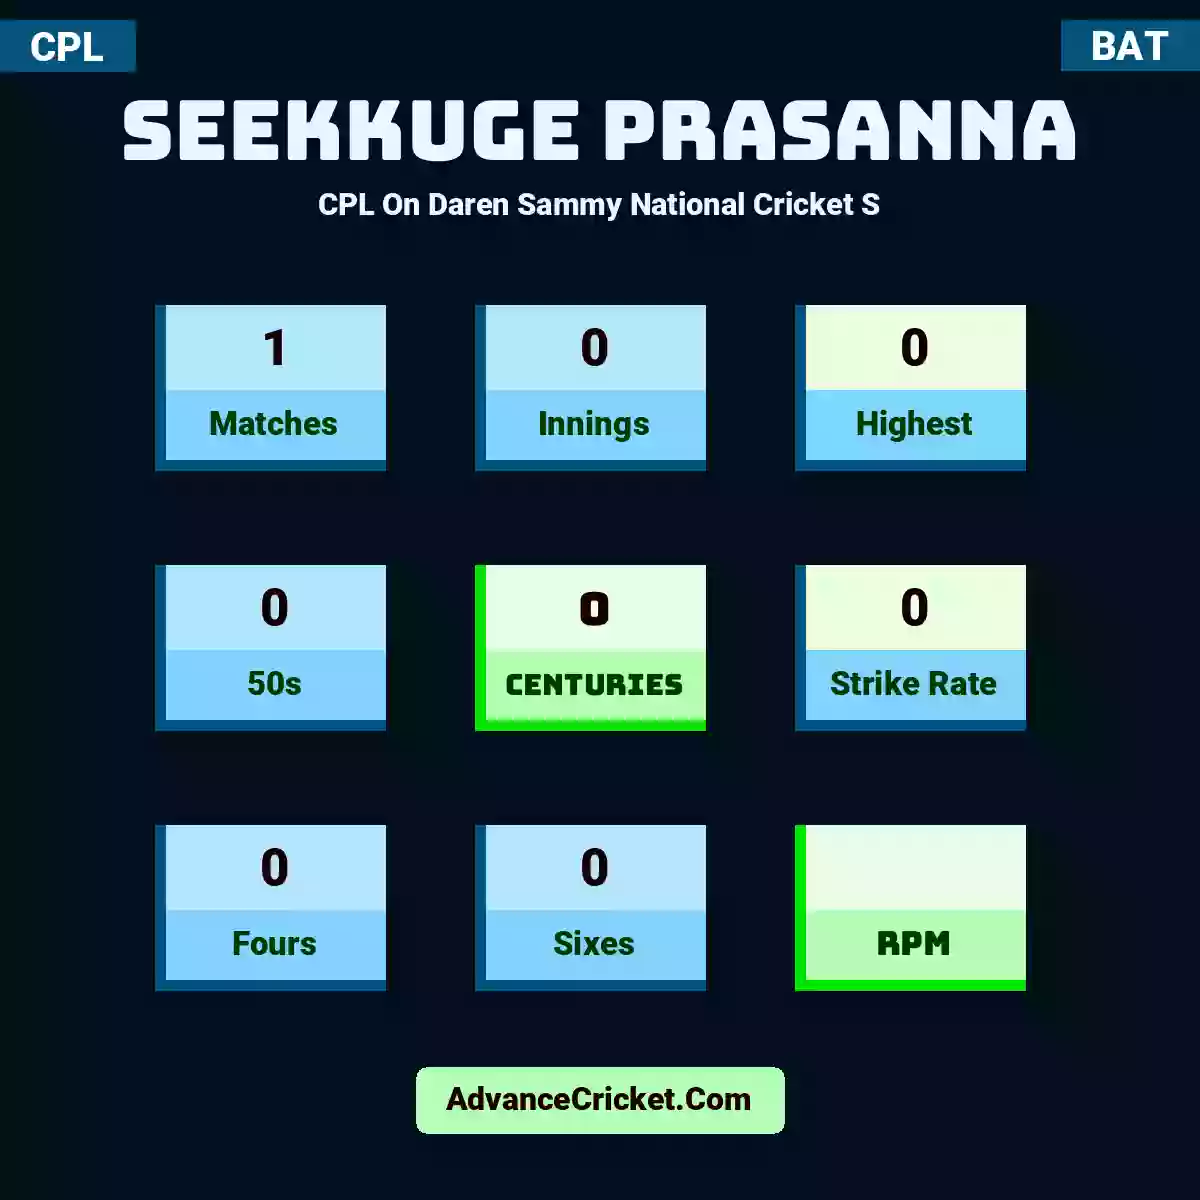 Seekkuge Prasanna CPL  On Daren Sammy National Cricket S, Seekkuge Prasanna played 1 matches, scored 0 runs as highest, 0 half-centuries, and 0 centuries, with a strike rate of 0. S.Prasanna hit 0 fours and 0 sixes.